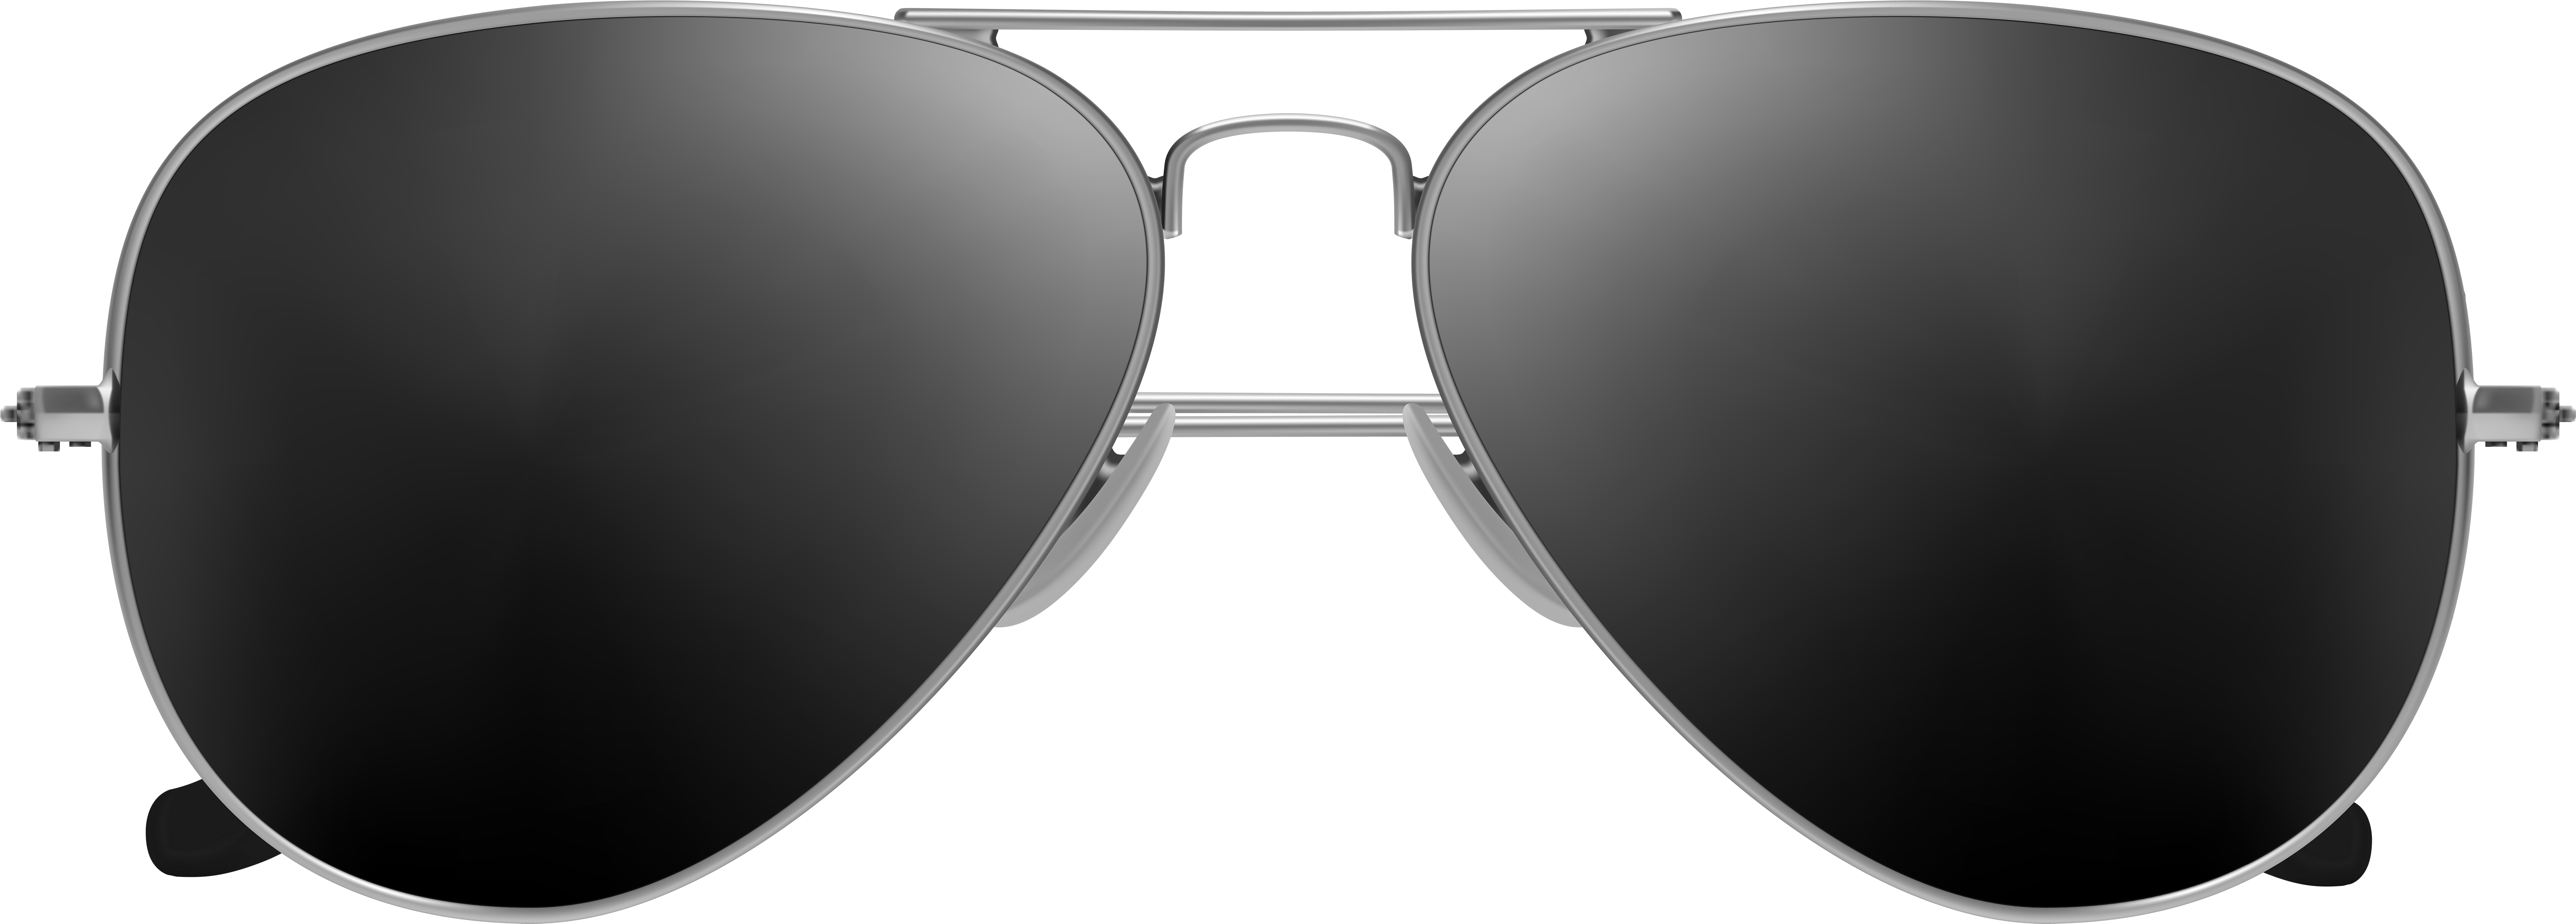 Aviator Sunglasses Transparent Background Black Aviator Glasses Png